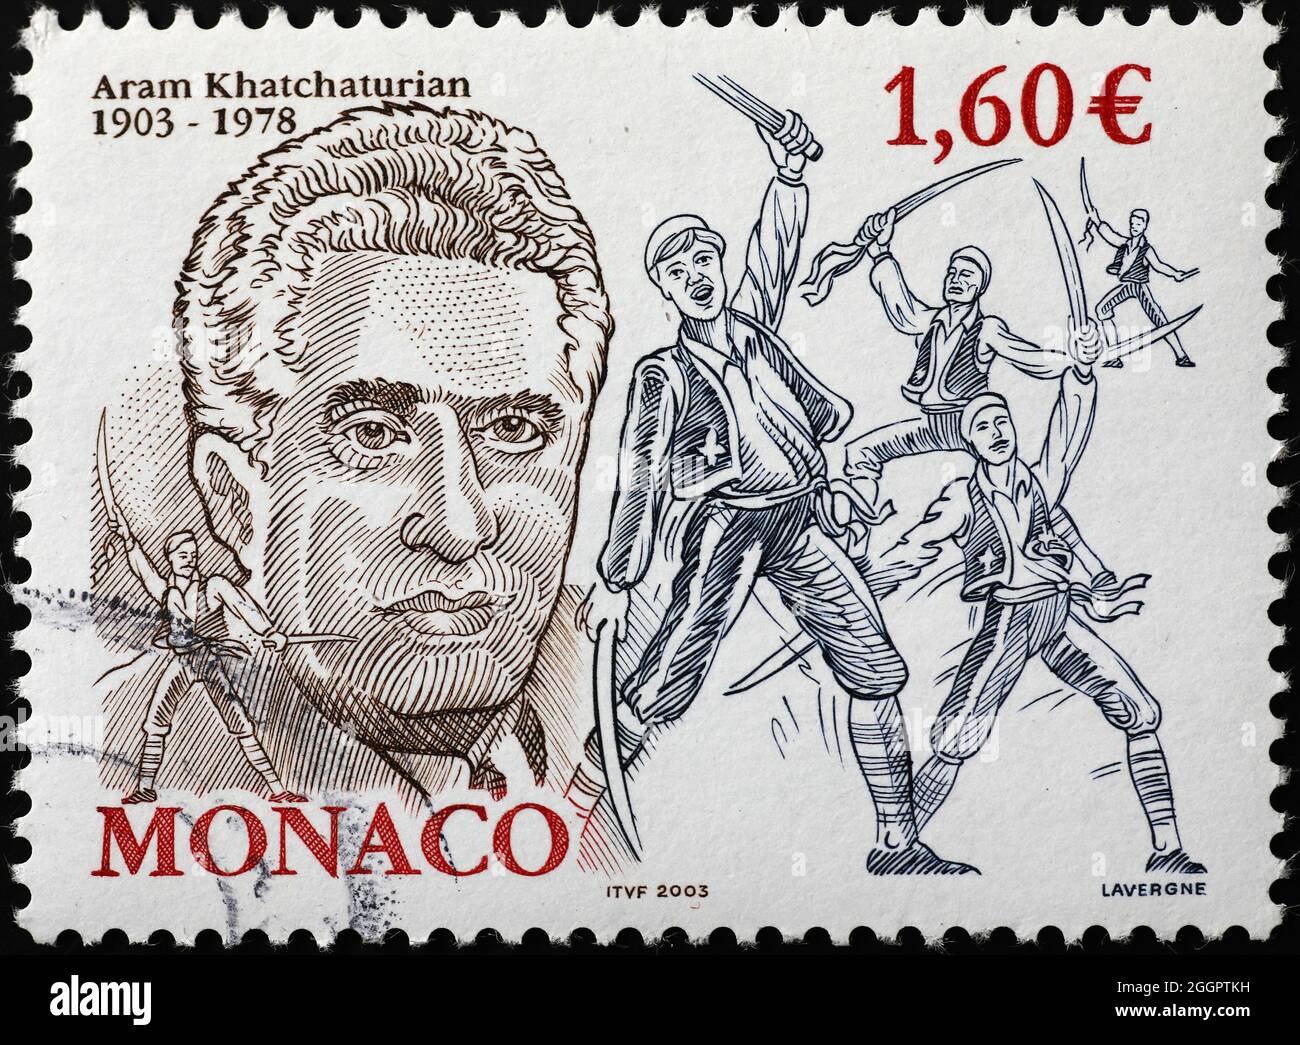 Aram Kachaturian portrait on postage stamp Stock Photo